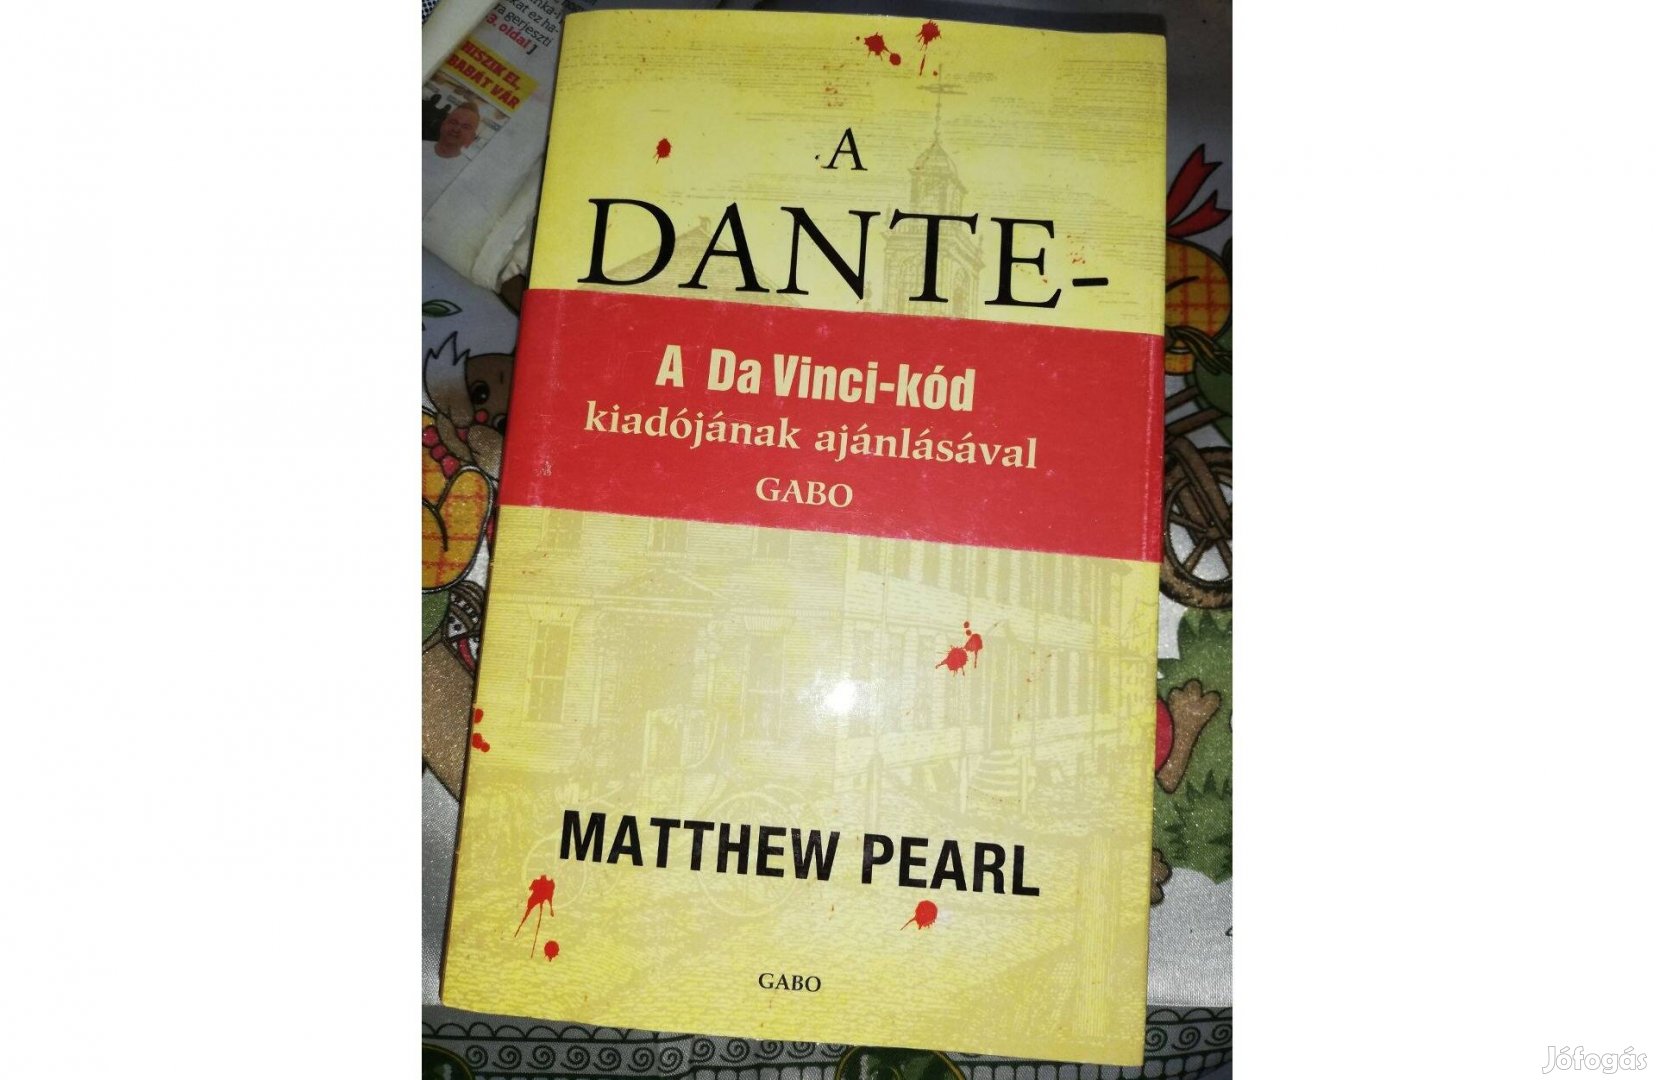 Matthex Pearl - A Dante c. könyv 1000 forint